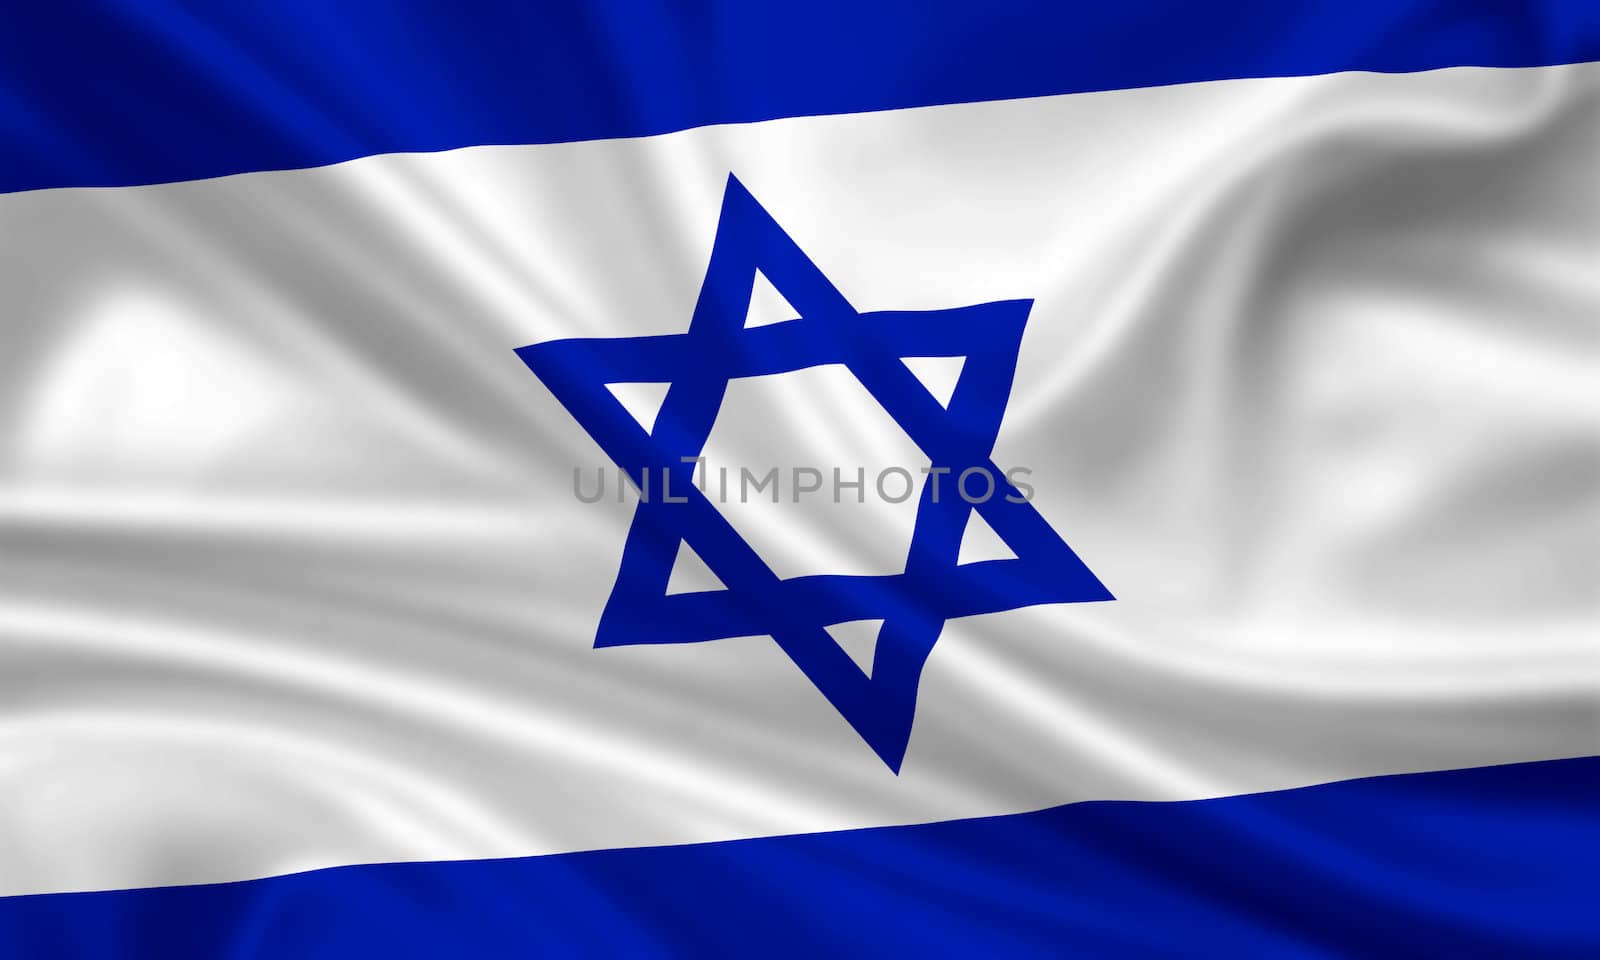 waving flag of israel